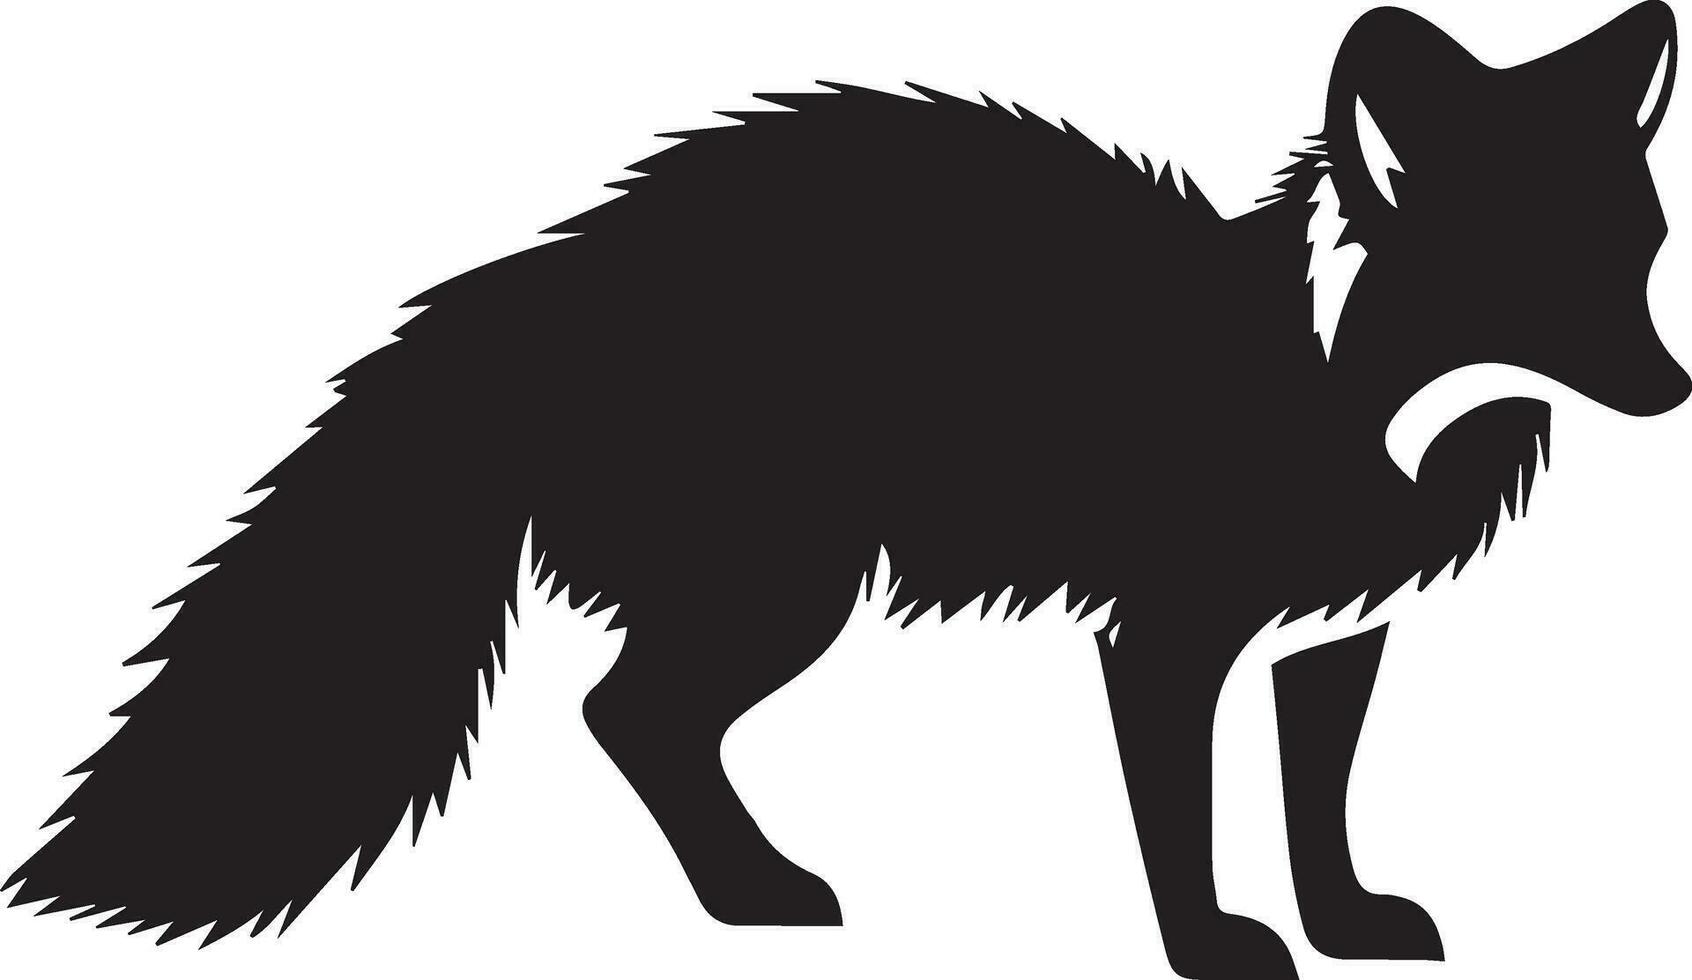 Arctic fox vector silhouette black color